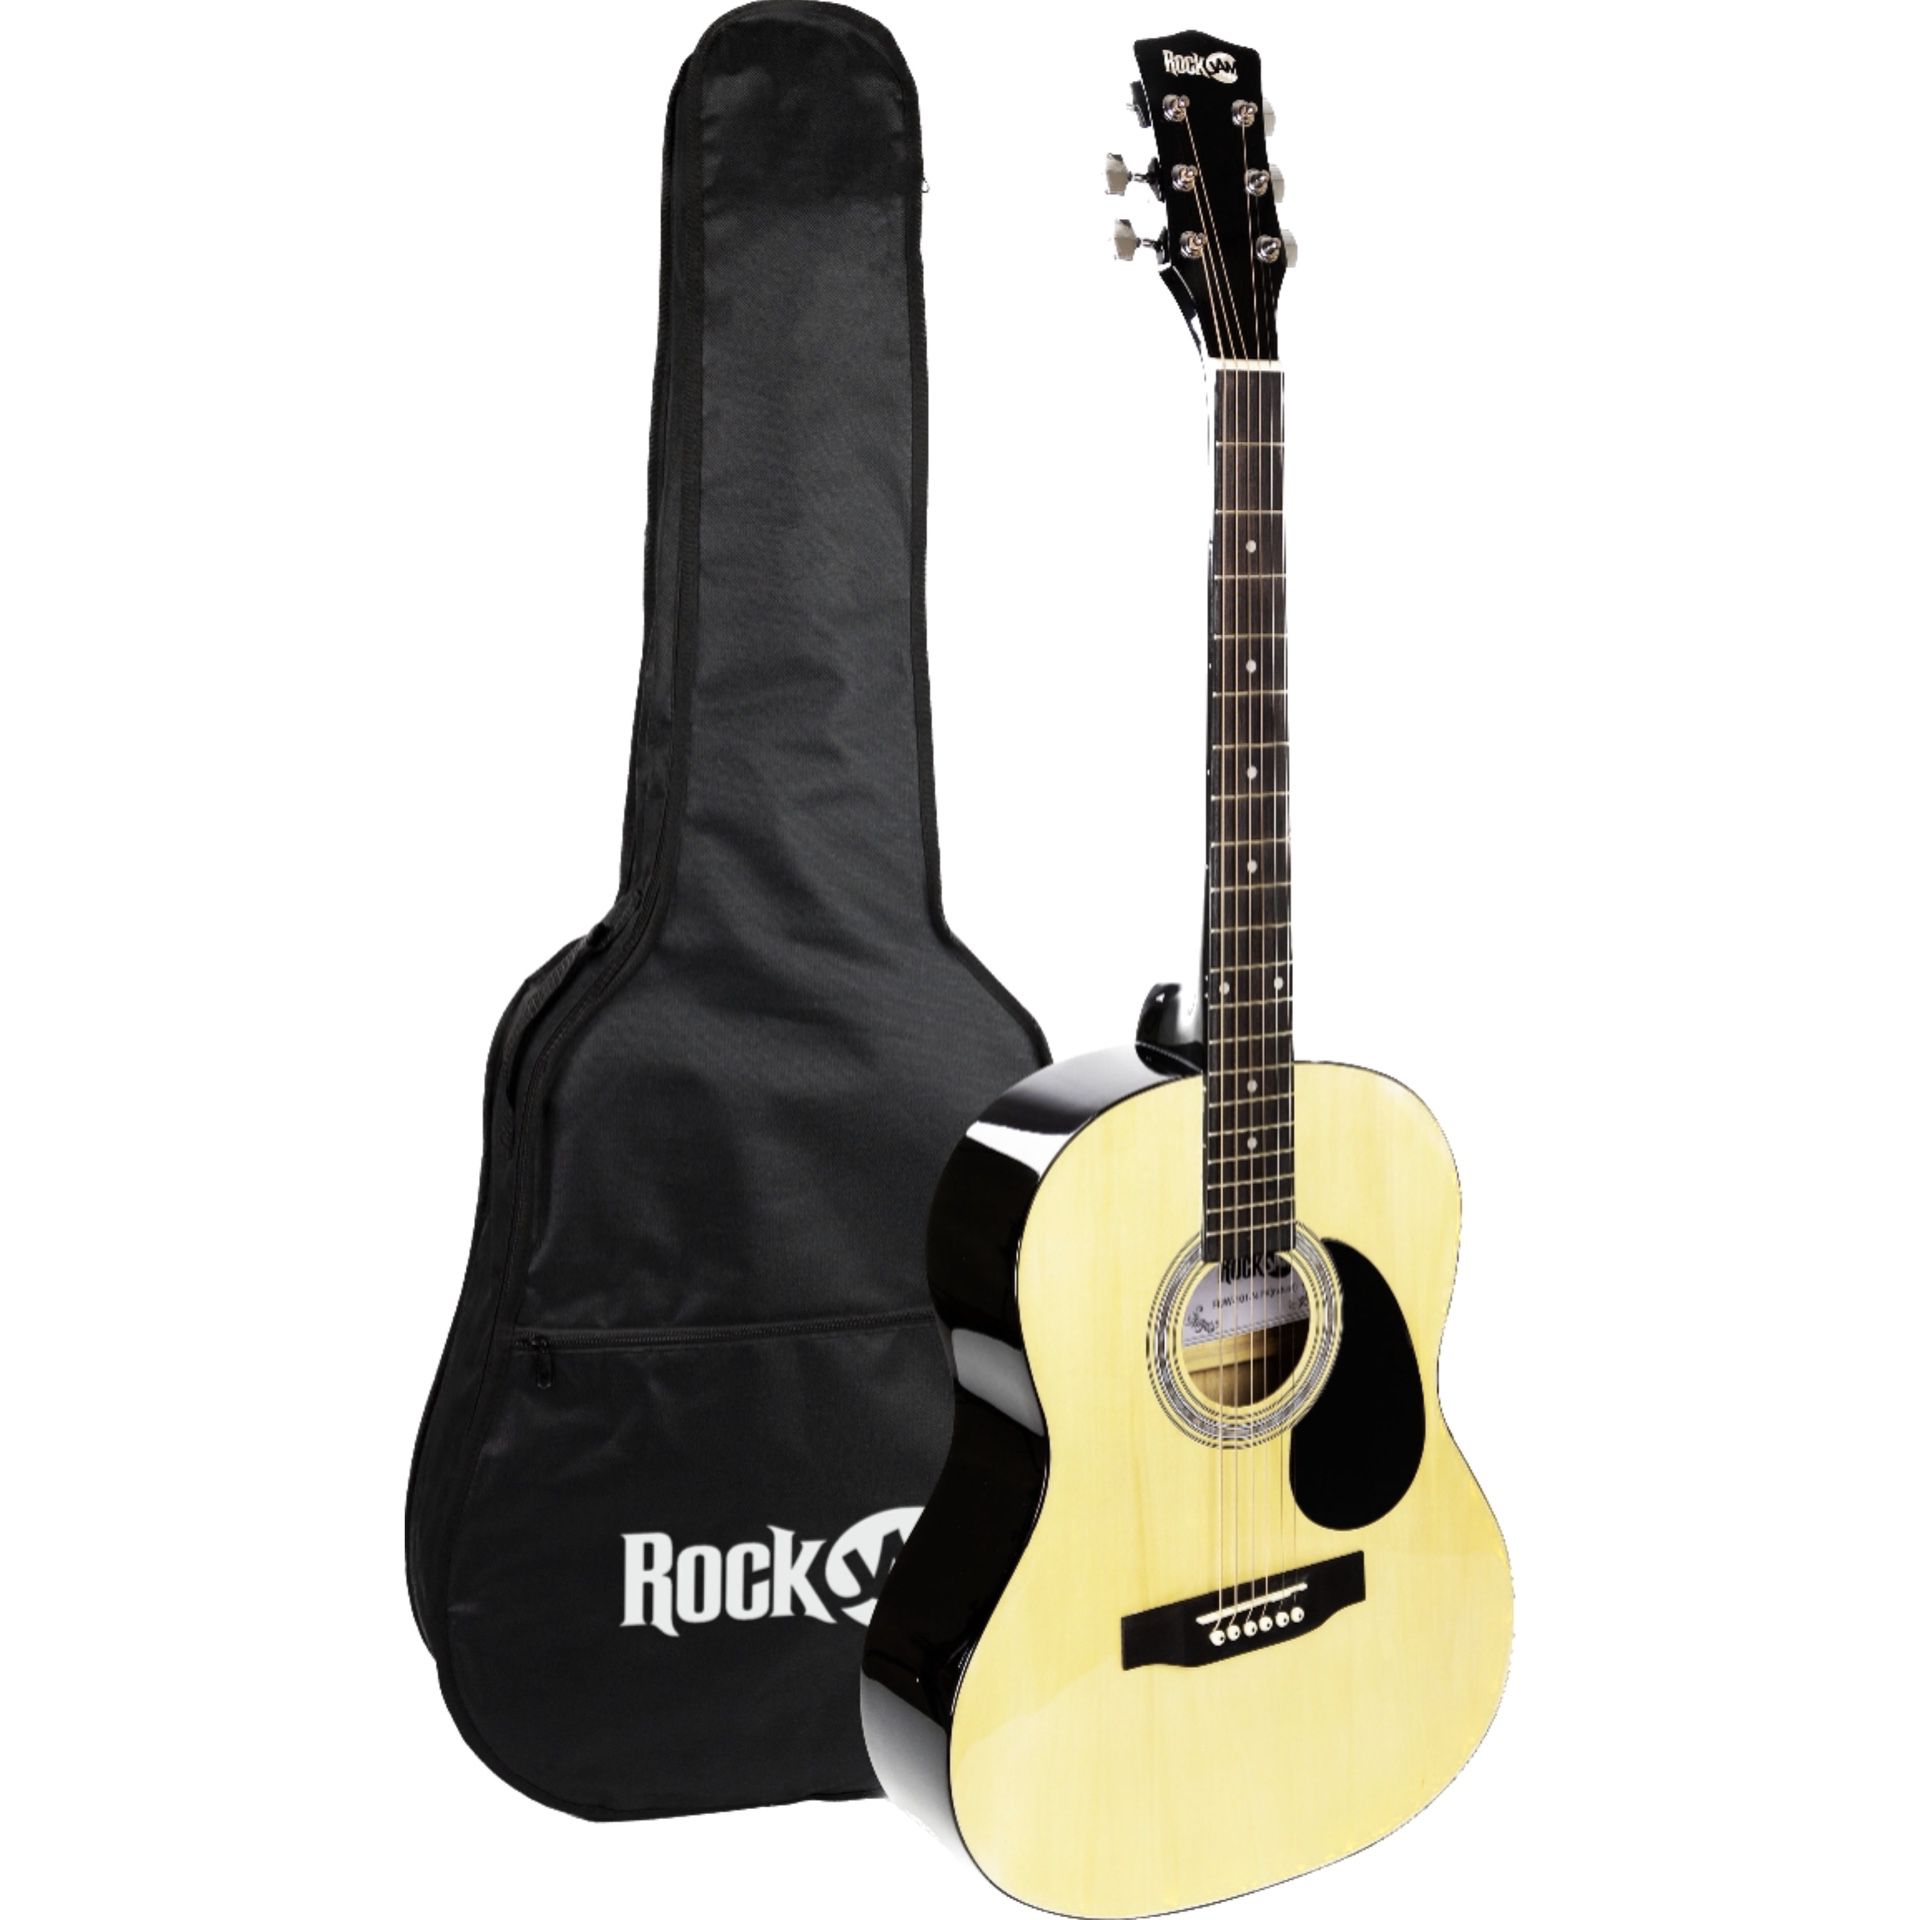 Brand New RockJam Natural Acoustic Guitar Kit